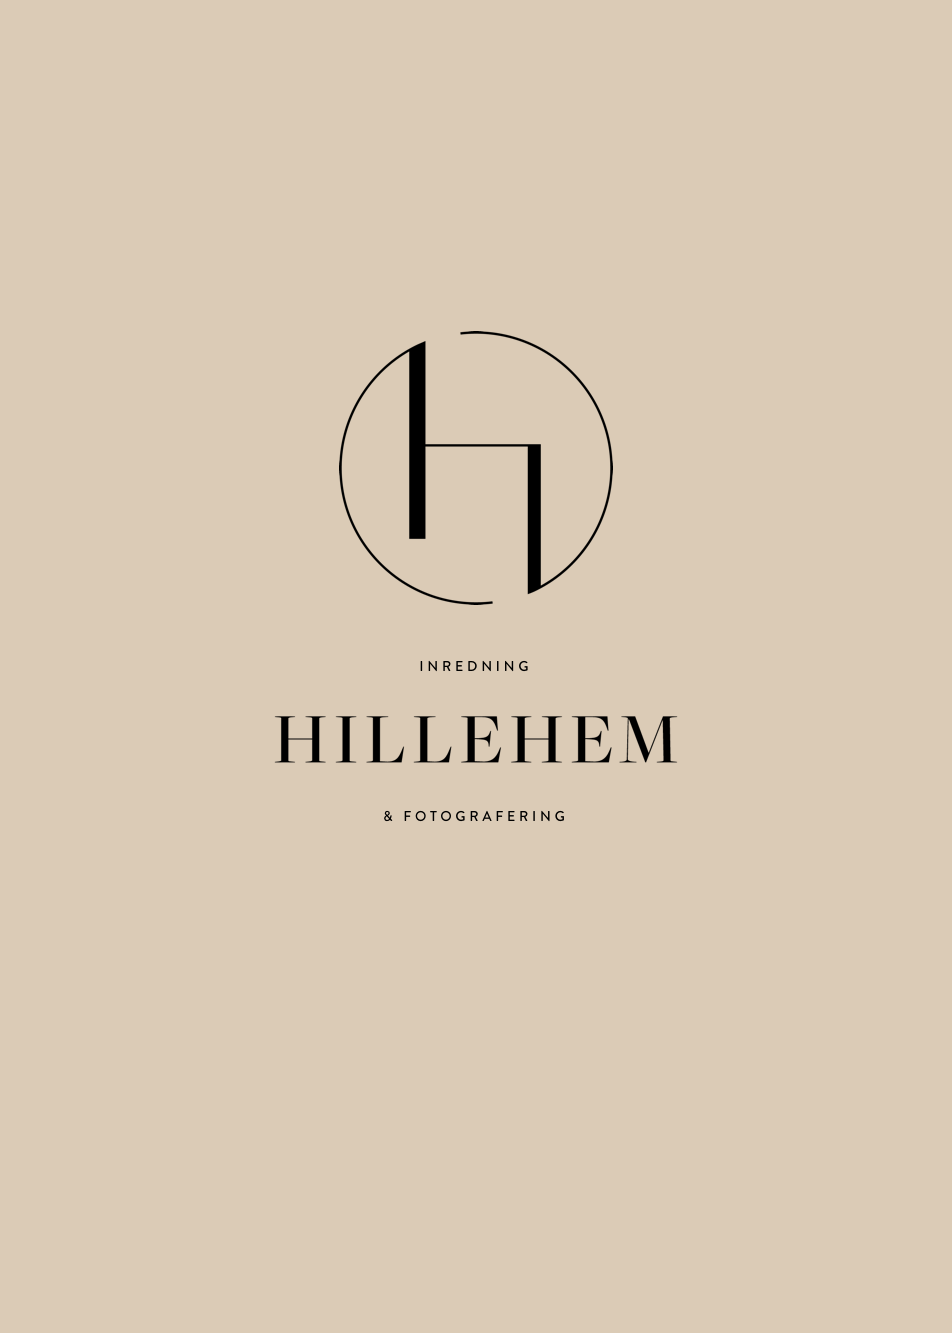 hillehem_logo_view5x7